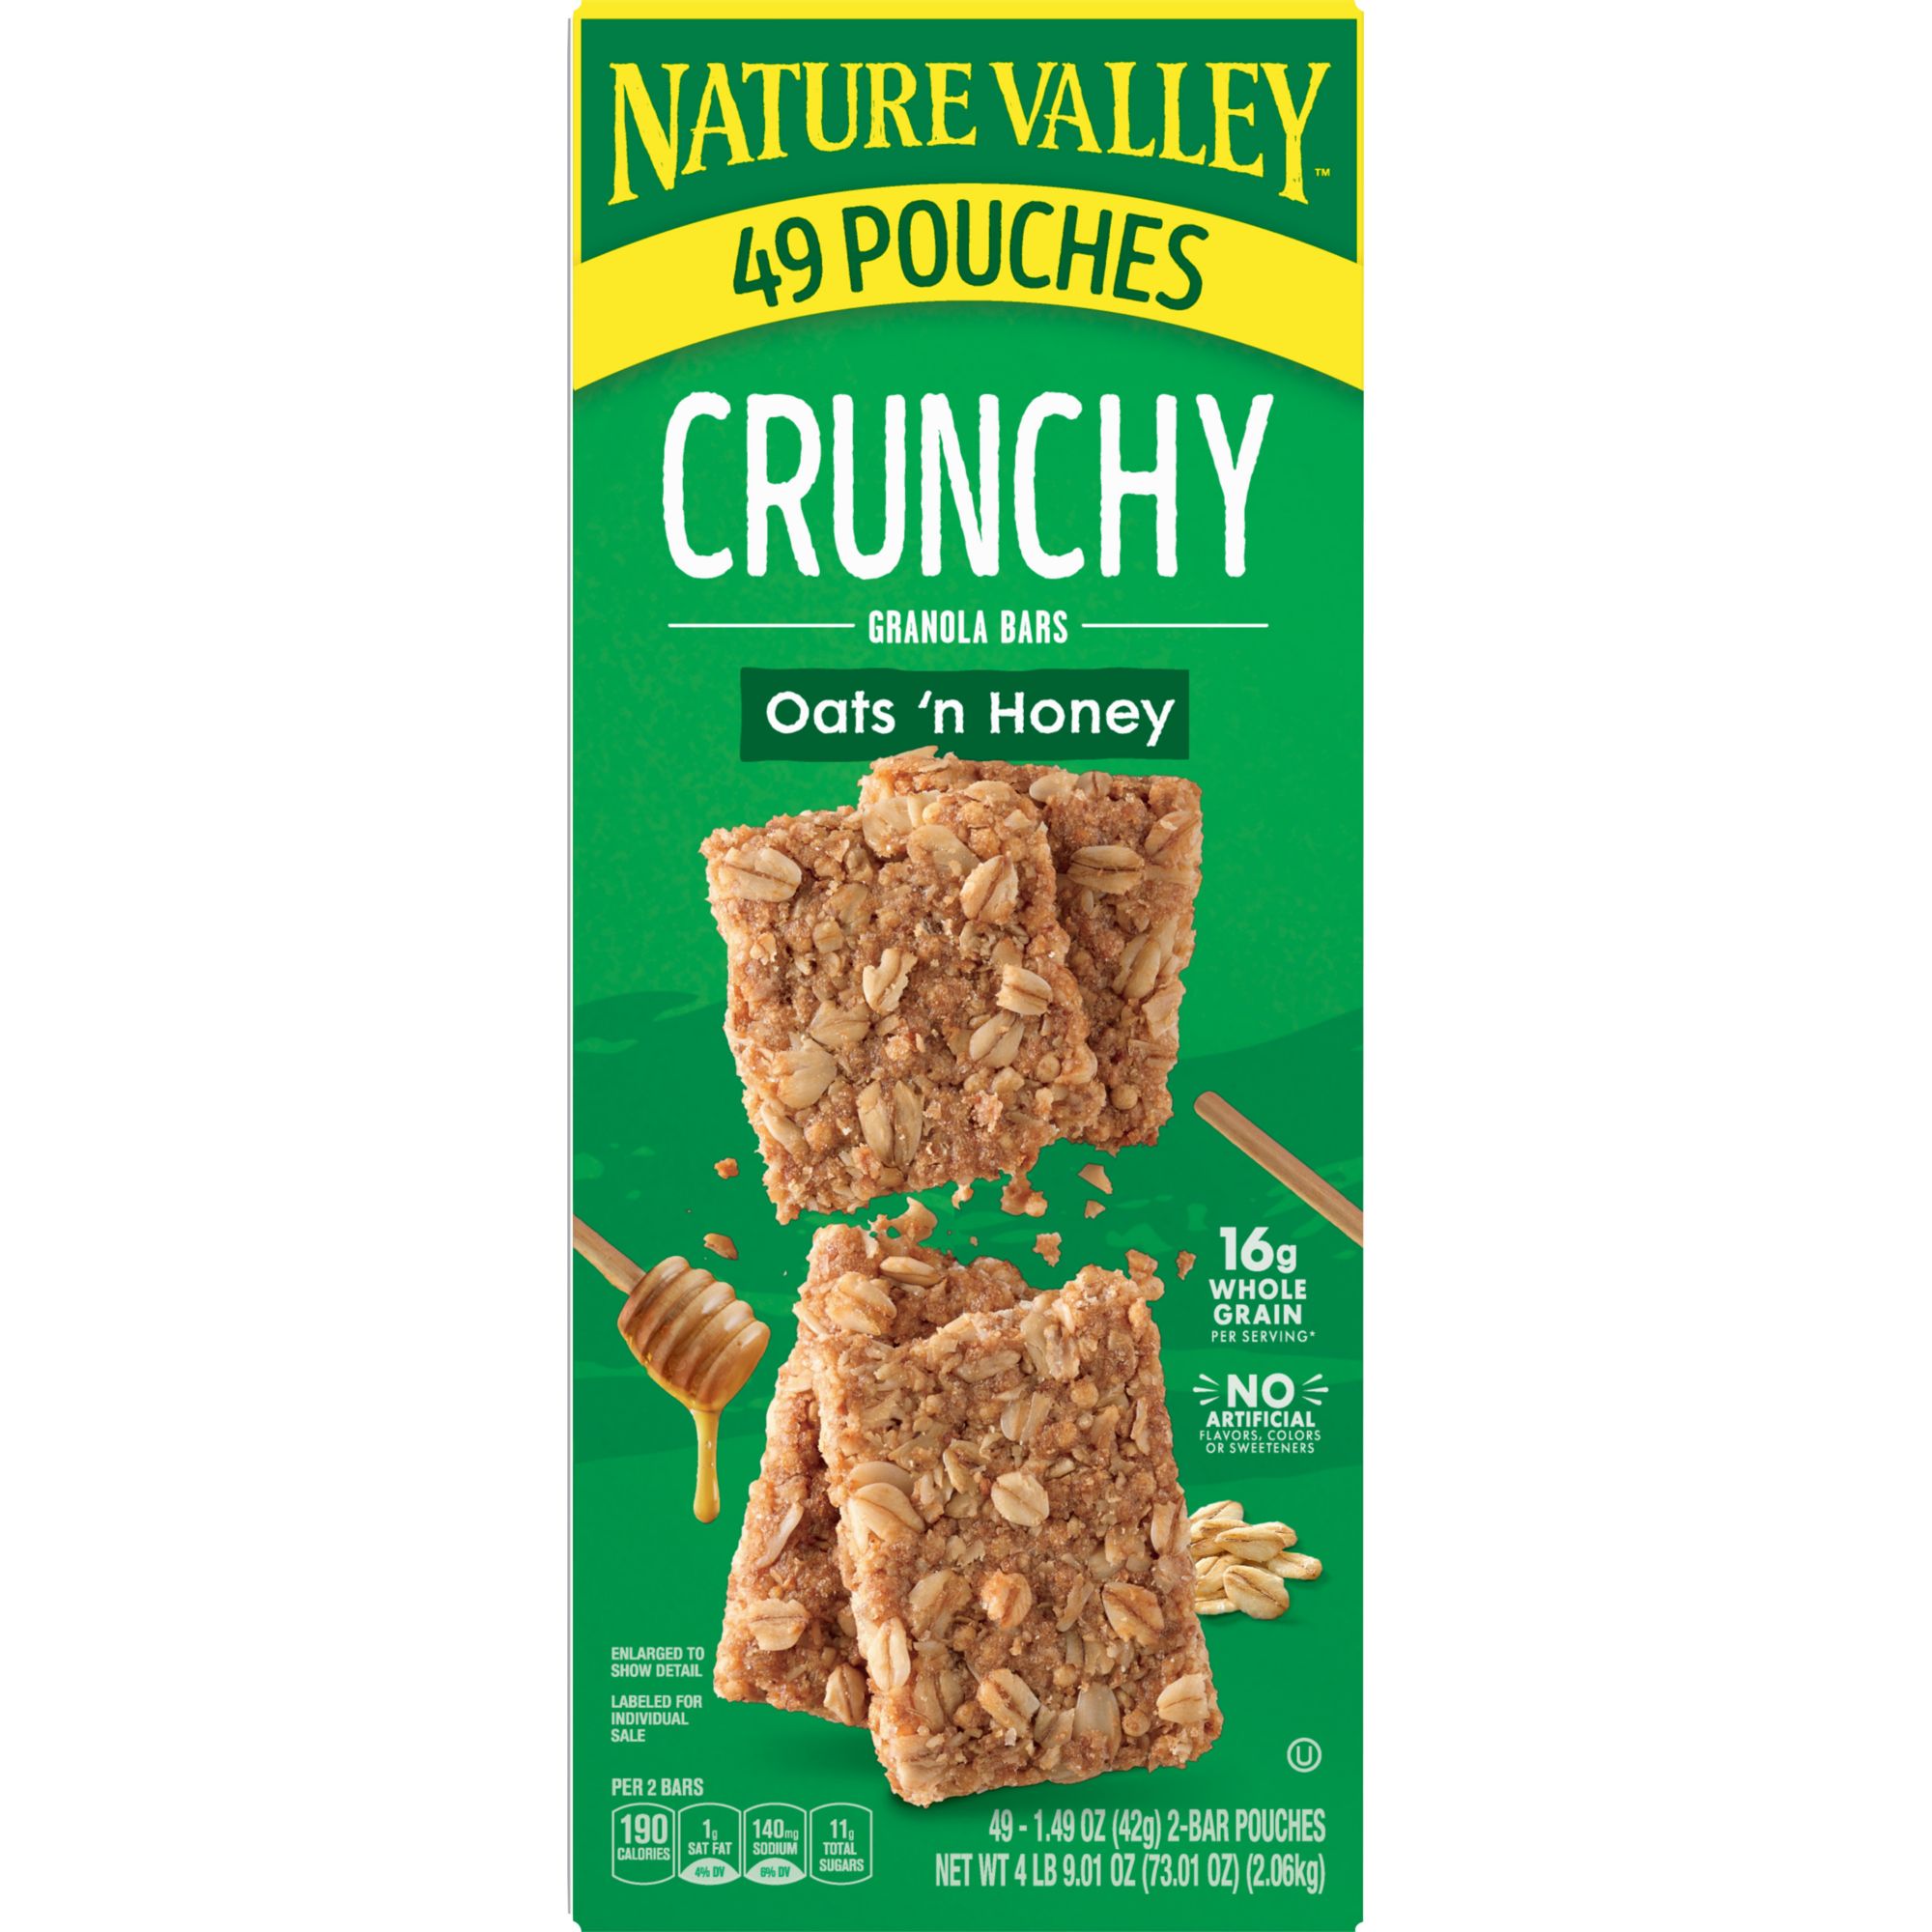 Nature Valley Oats 'n Honey Crunchy Granola Bars, 2 pk./49 ct.